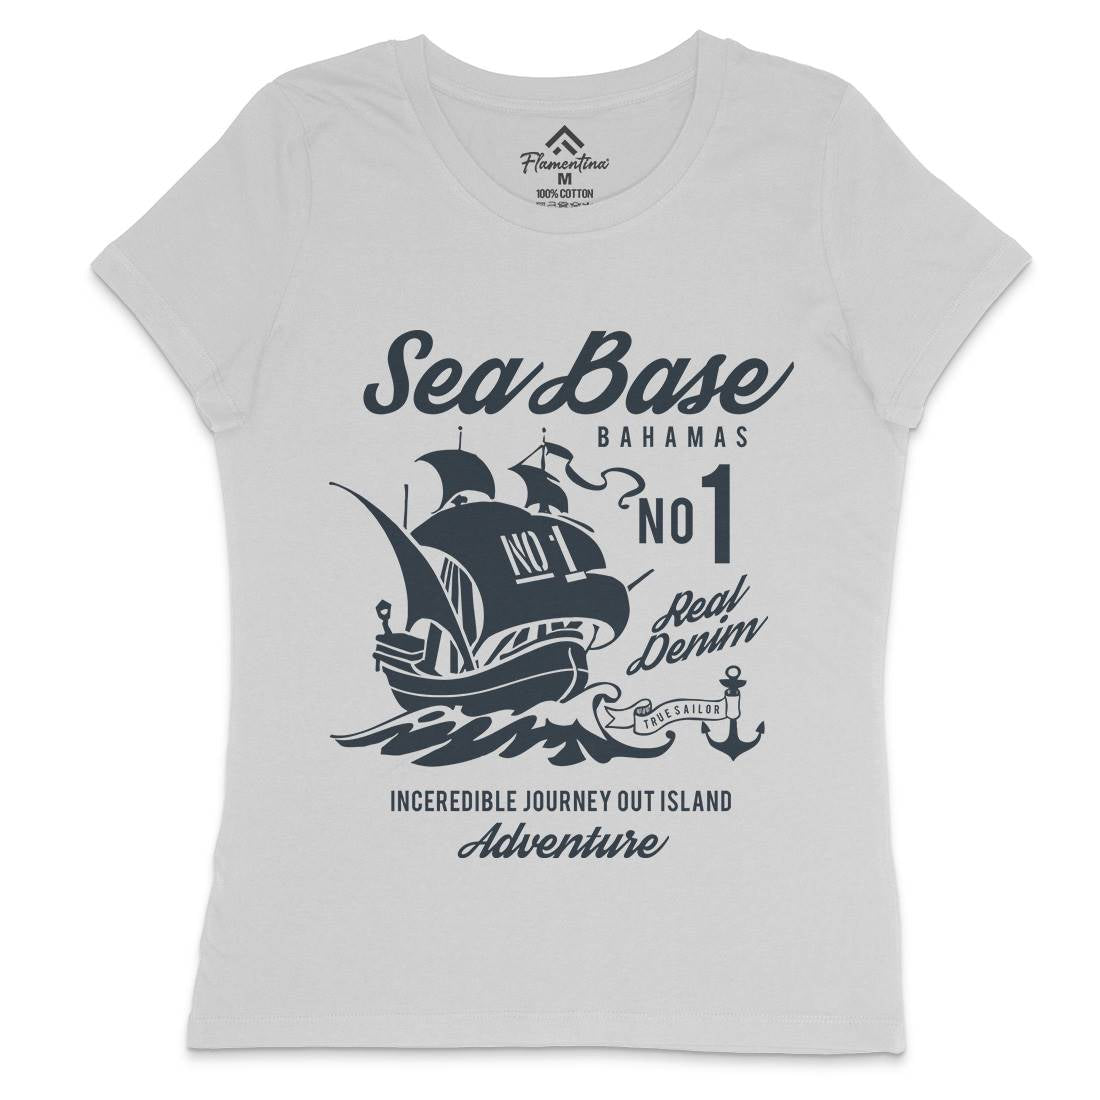 Sea Base Womens Crew Neck T-Shirt Navy B252